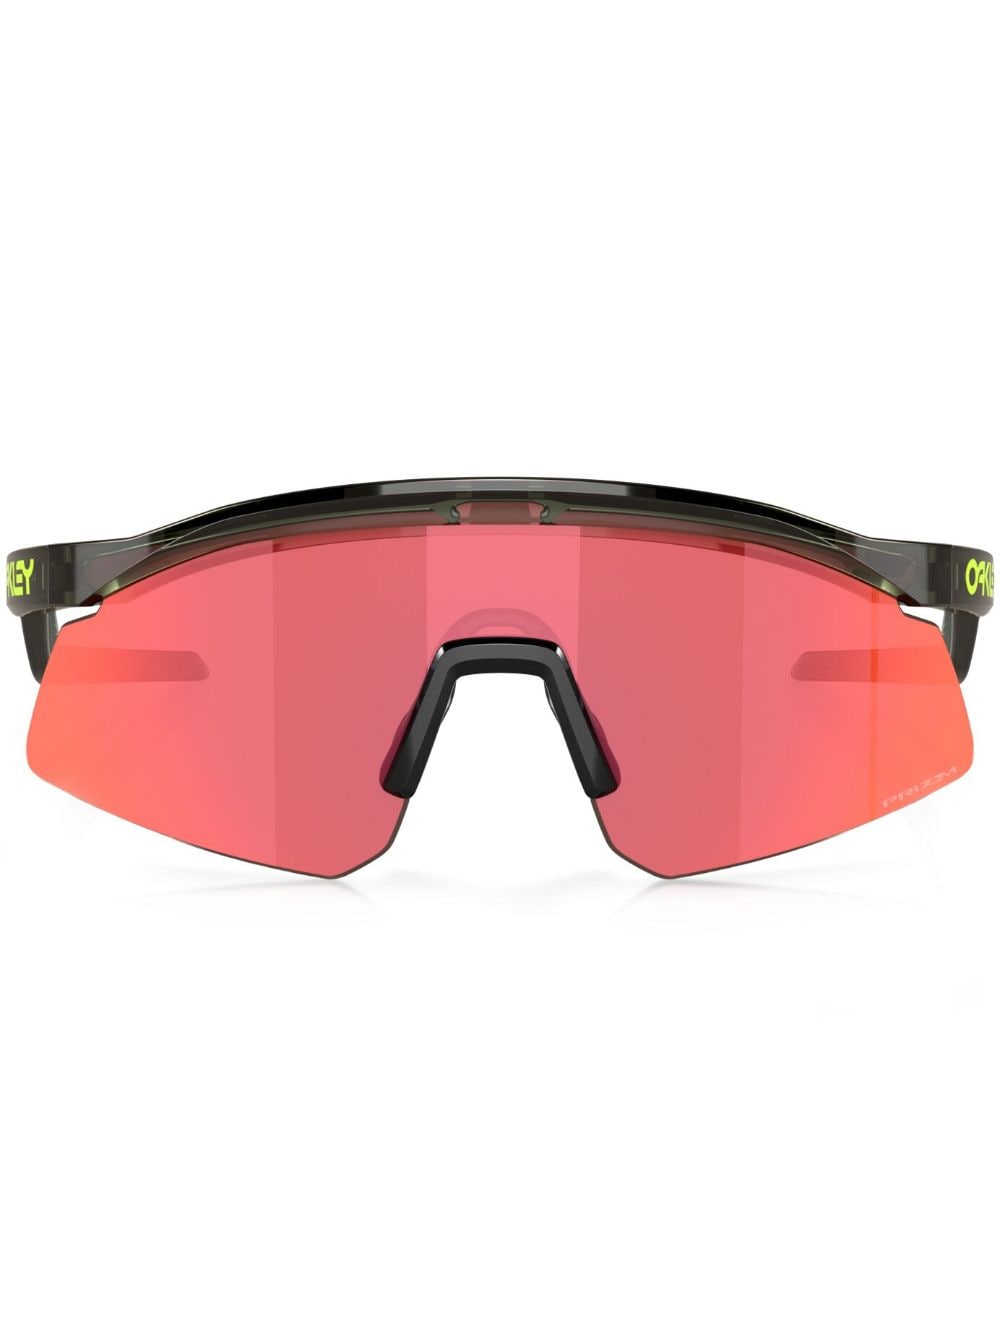 Hydra Coalesce shield-frame sunglasses<BR/>